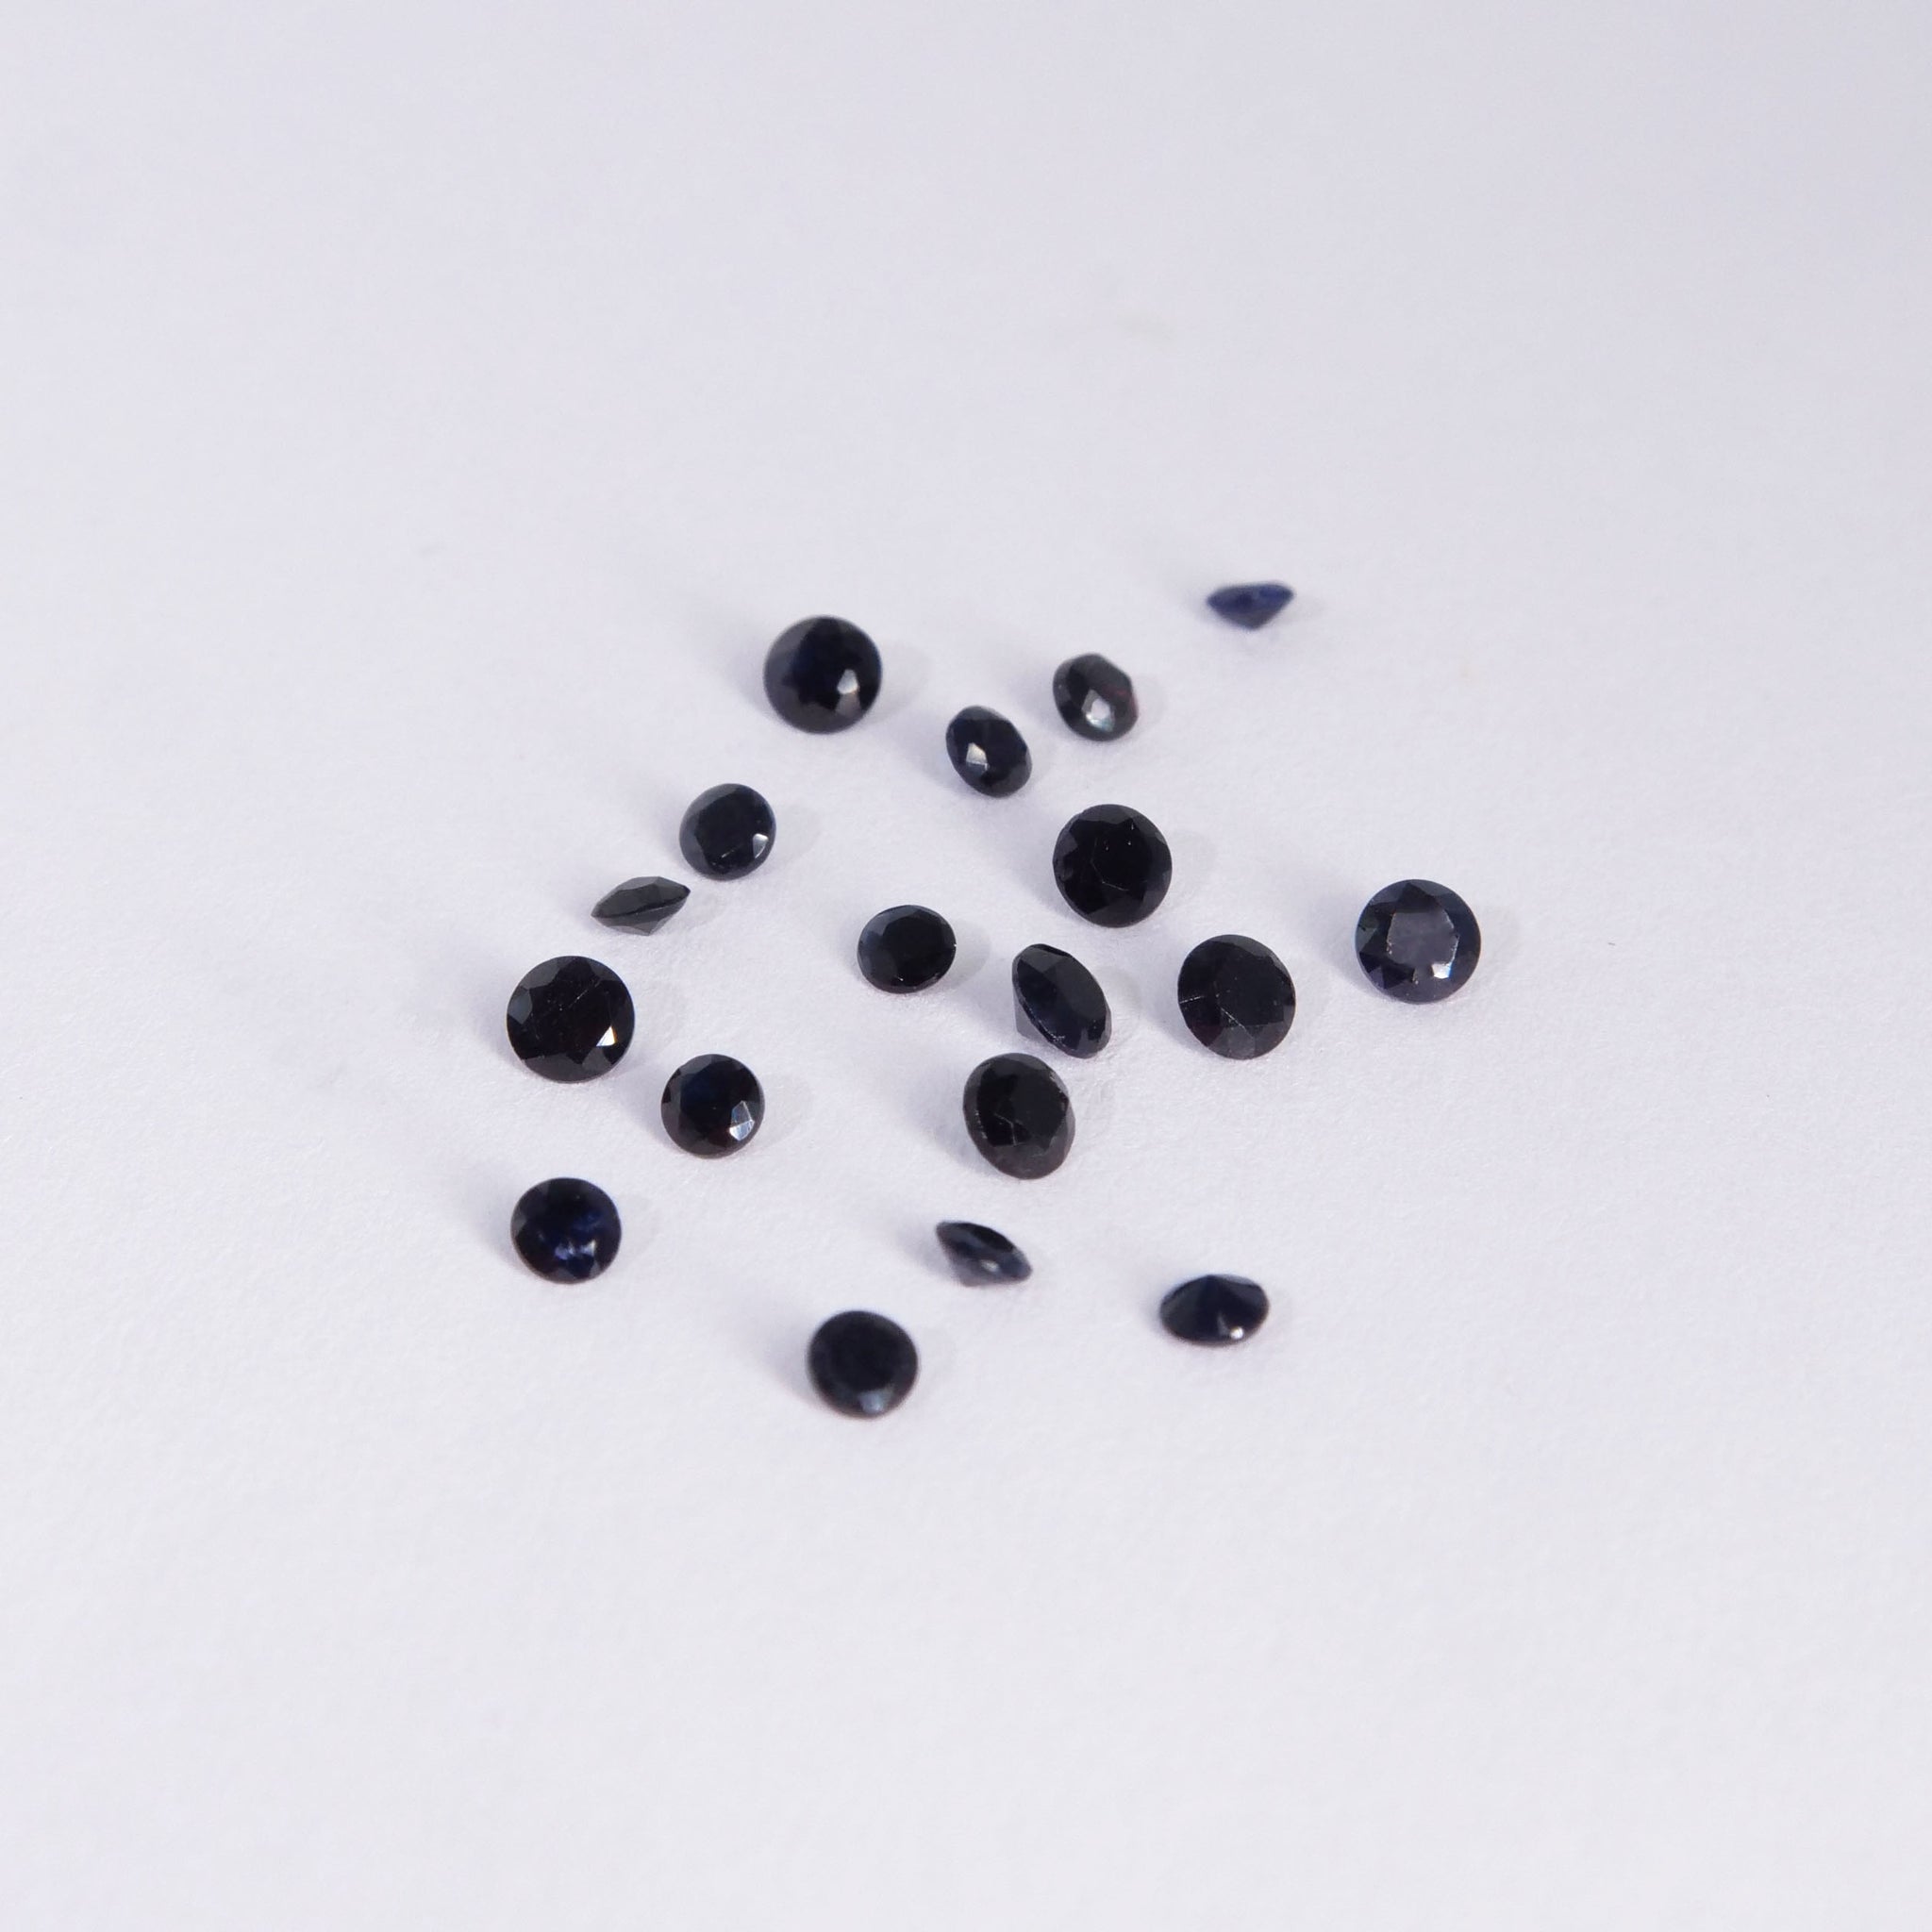 Spinel | round cut 3mm, black color, accent stones - Eden Garden Jewelry™